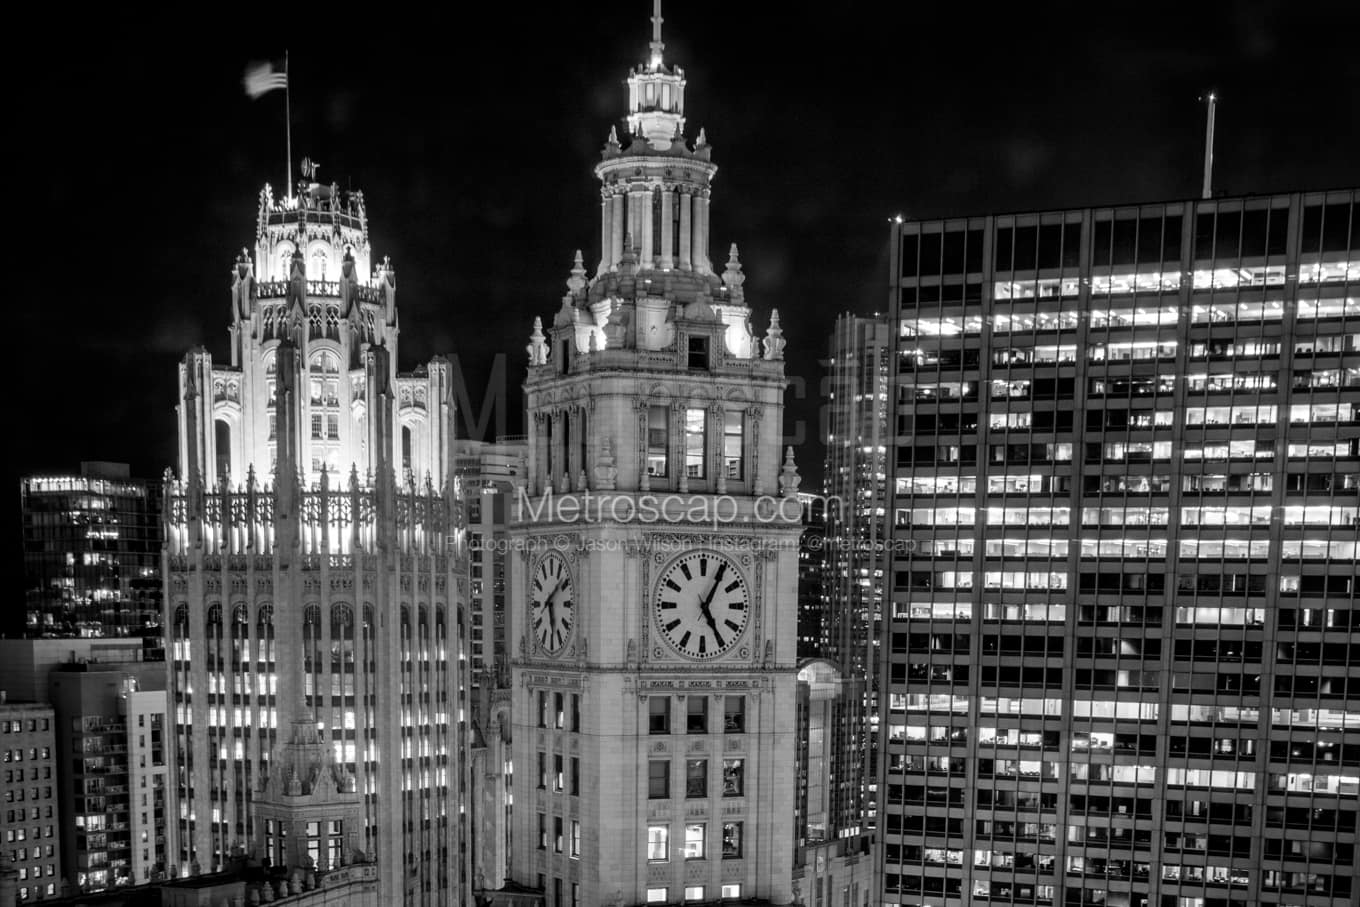 Black & White Chicago Architecture Pictures